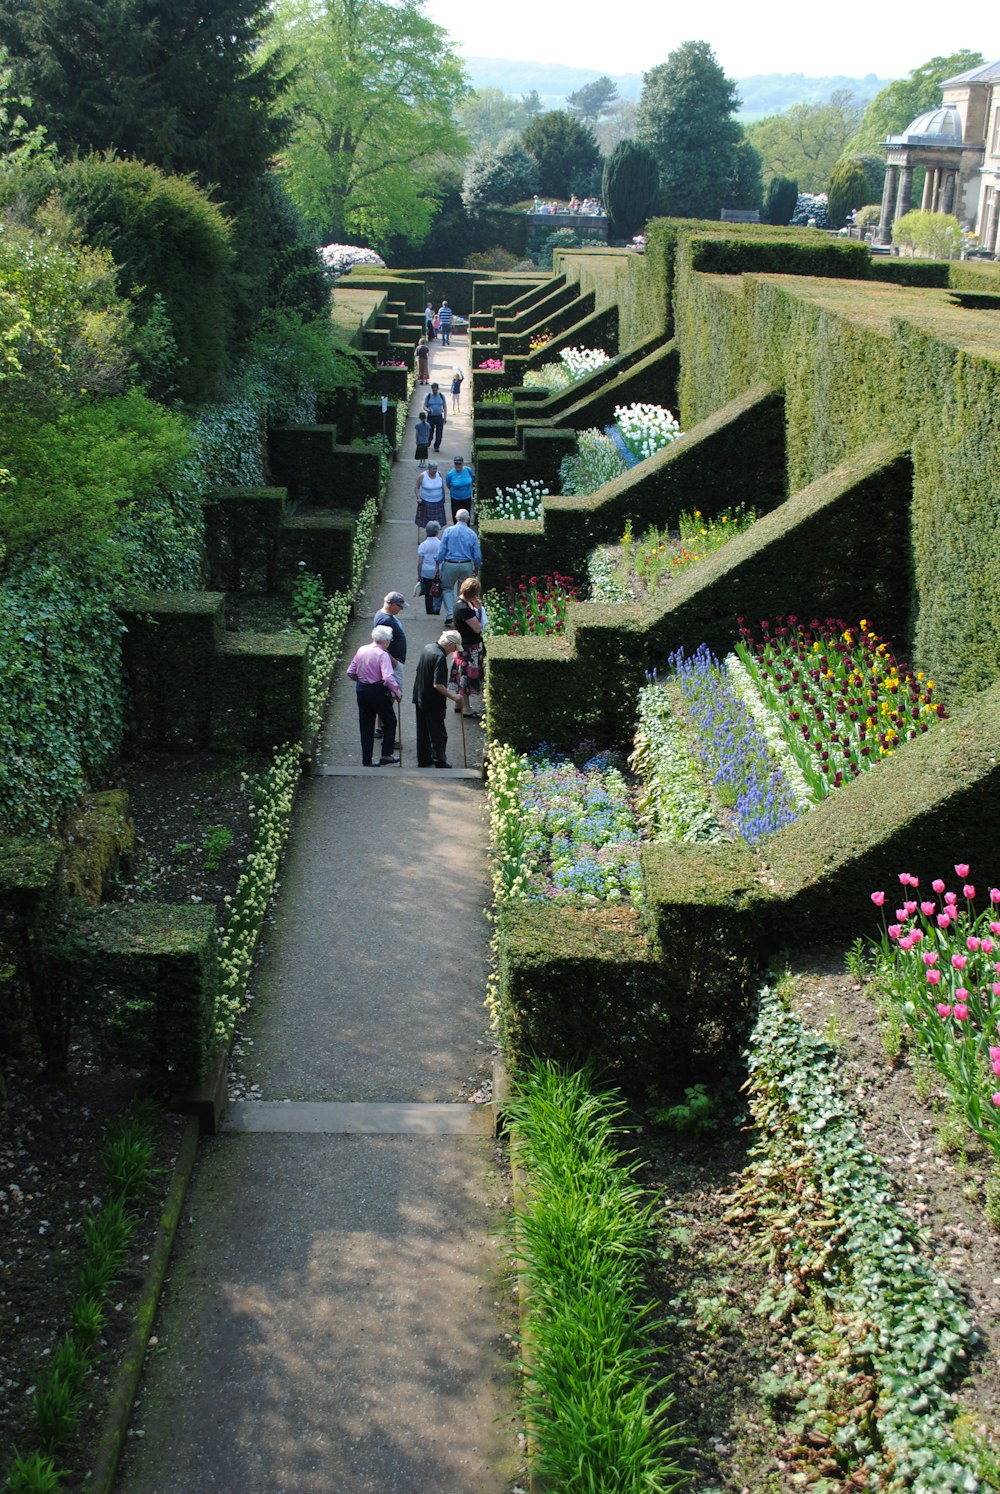 people walking on pathway between green plants during daytime